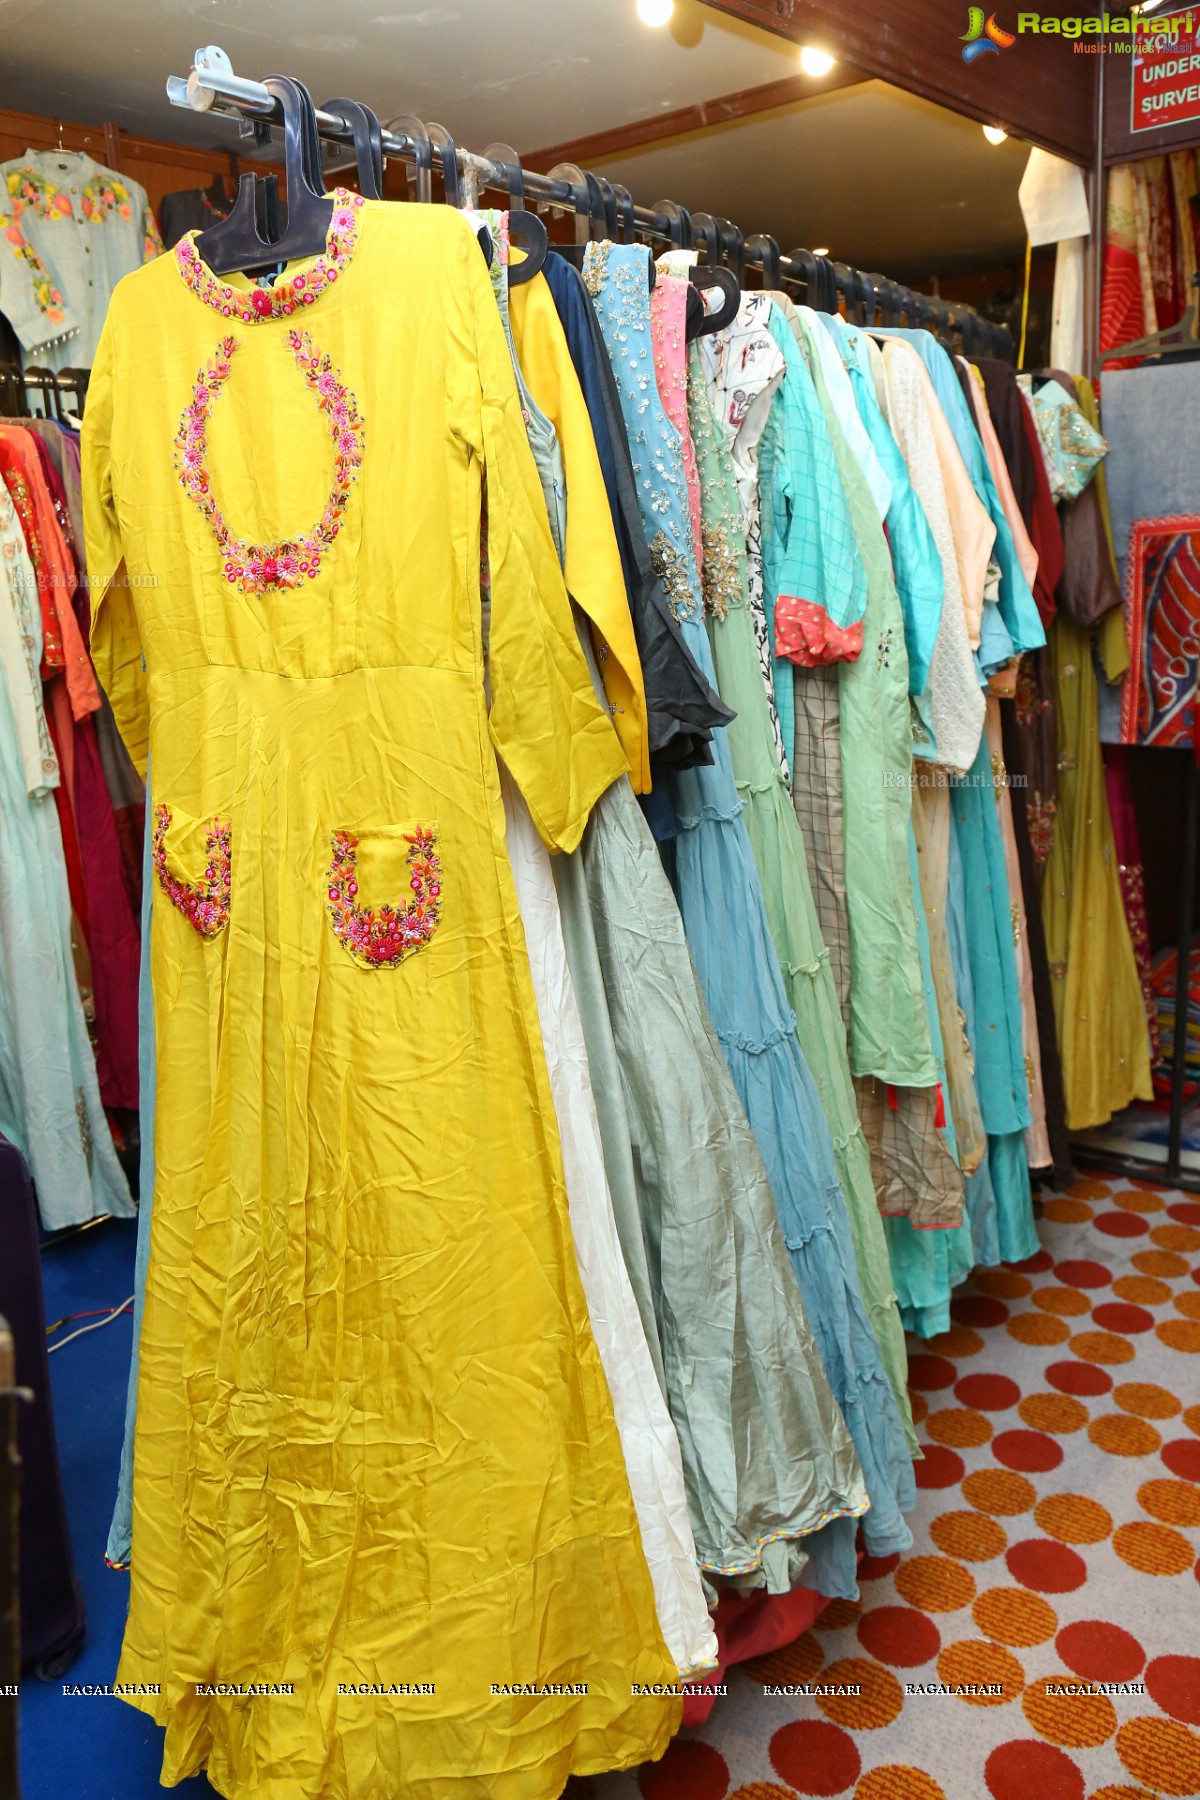 Sutraa Lifestyle & Fashion Dusshera and Diwali Exhibition inaugurated by Poonam Bajwa, Alankrita Bora